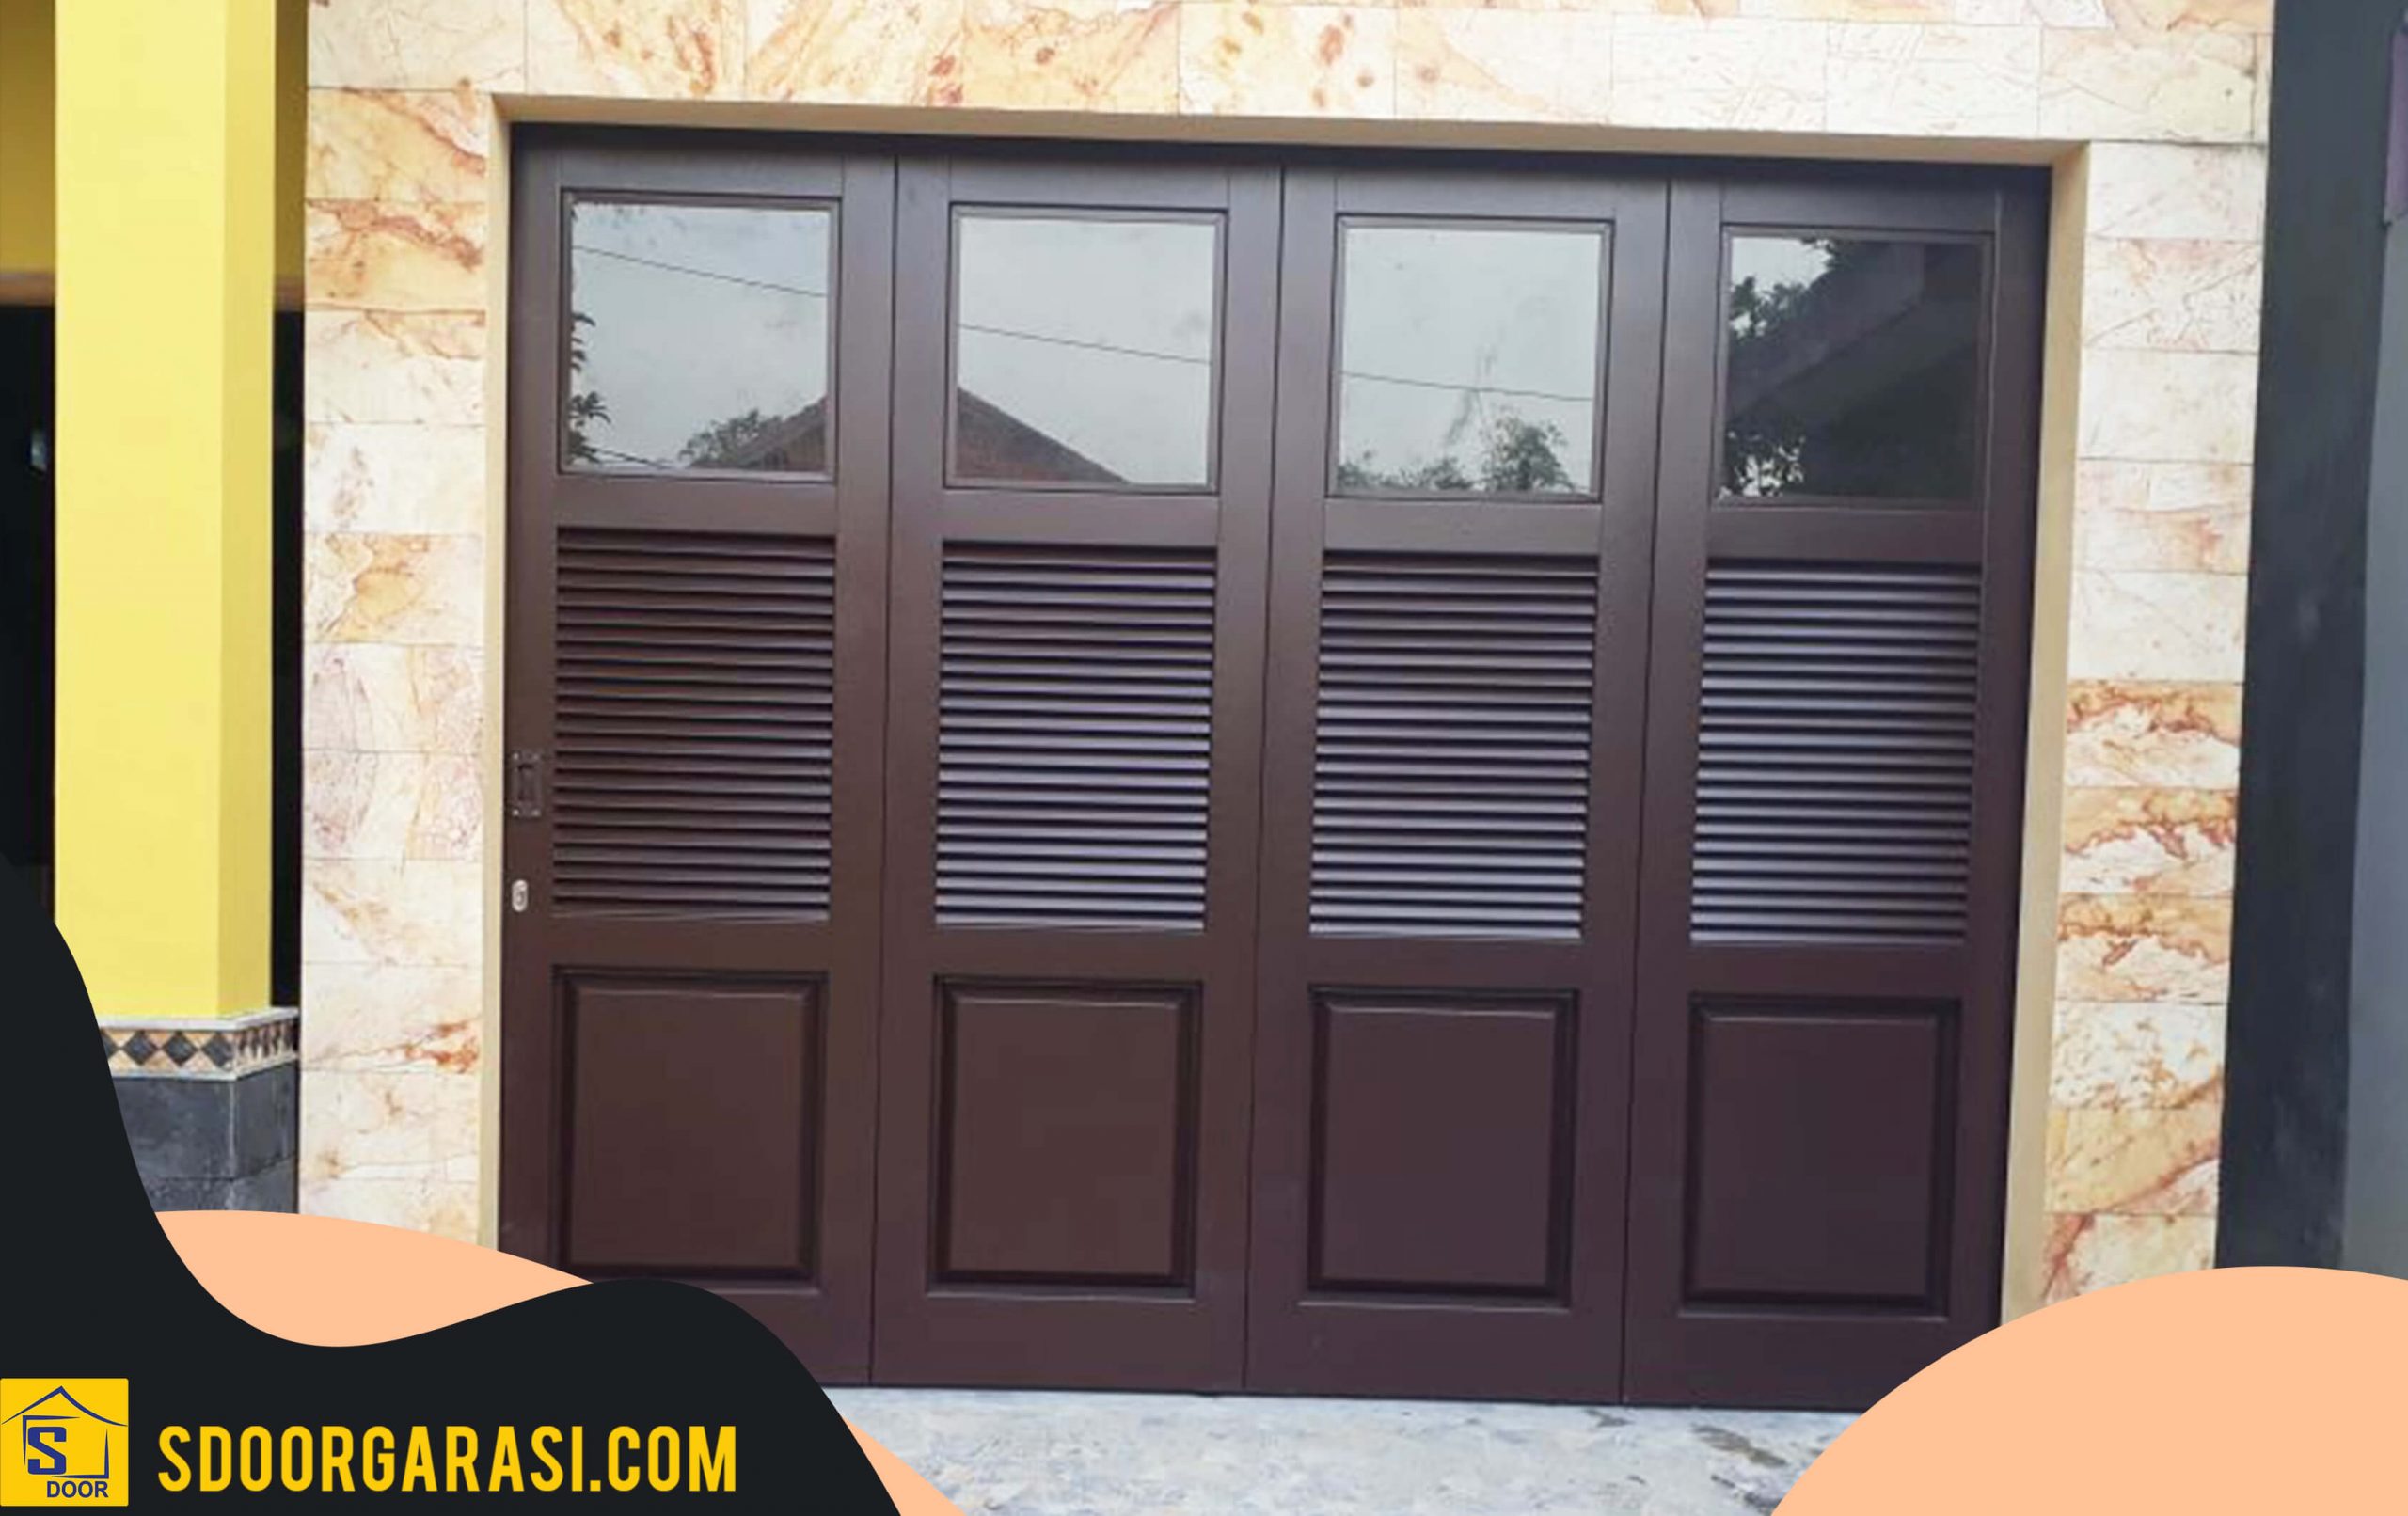 Spesifikasi Jasa pemasangan Pintu garasi surabaya Pintu garasi merk S Door yang hadir dari tahun 2017